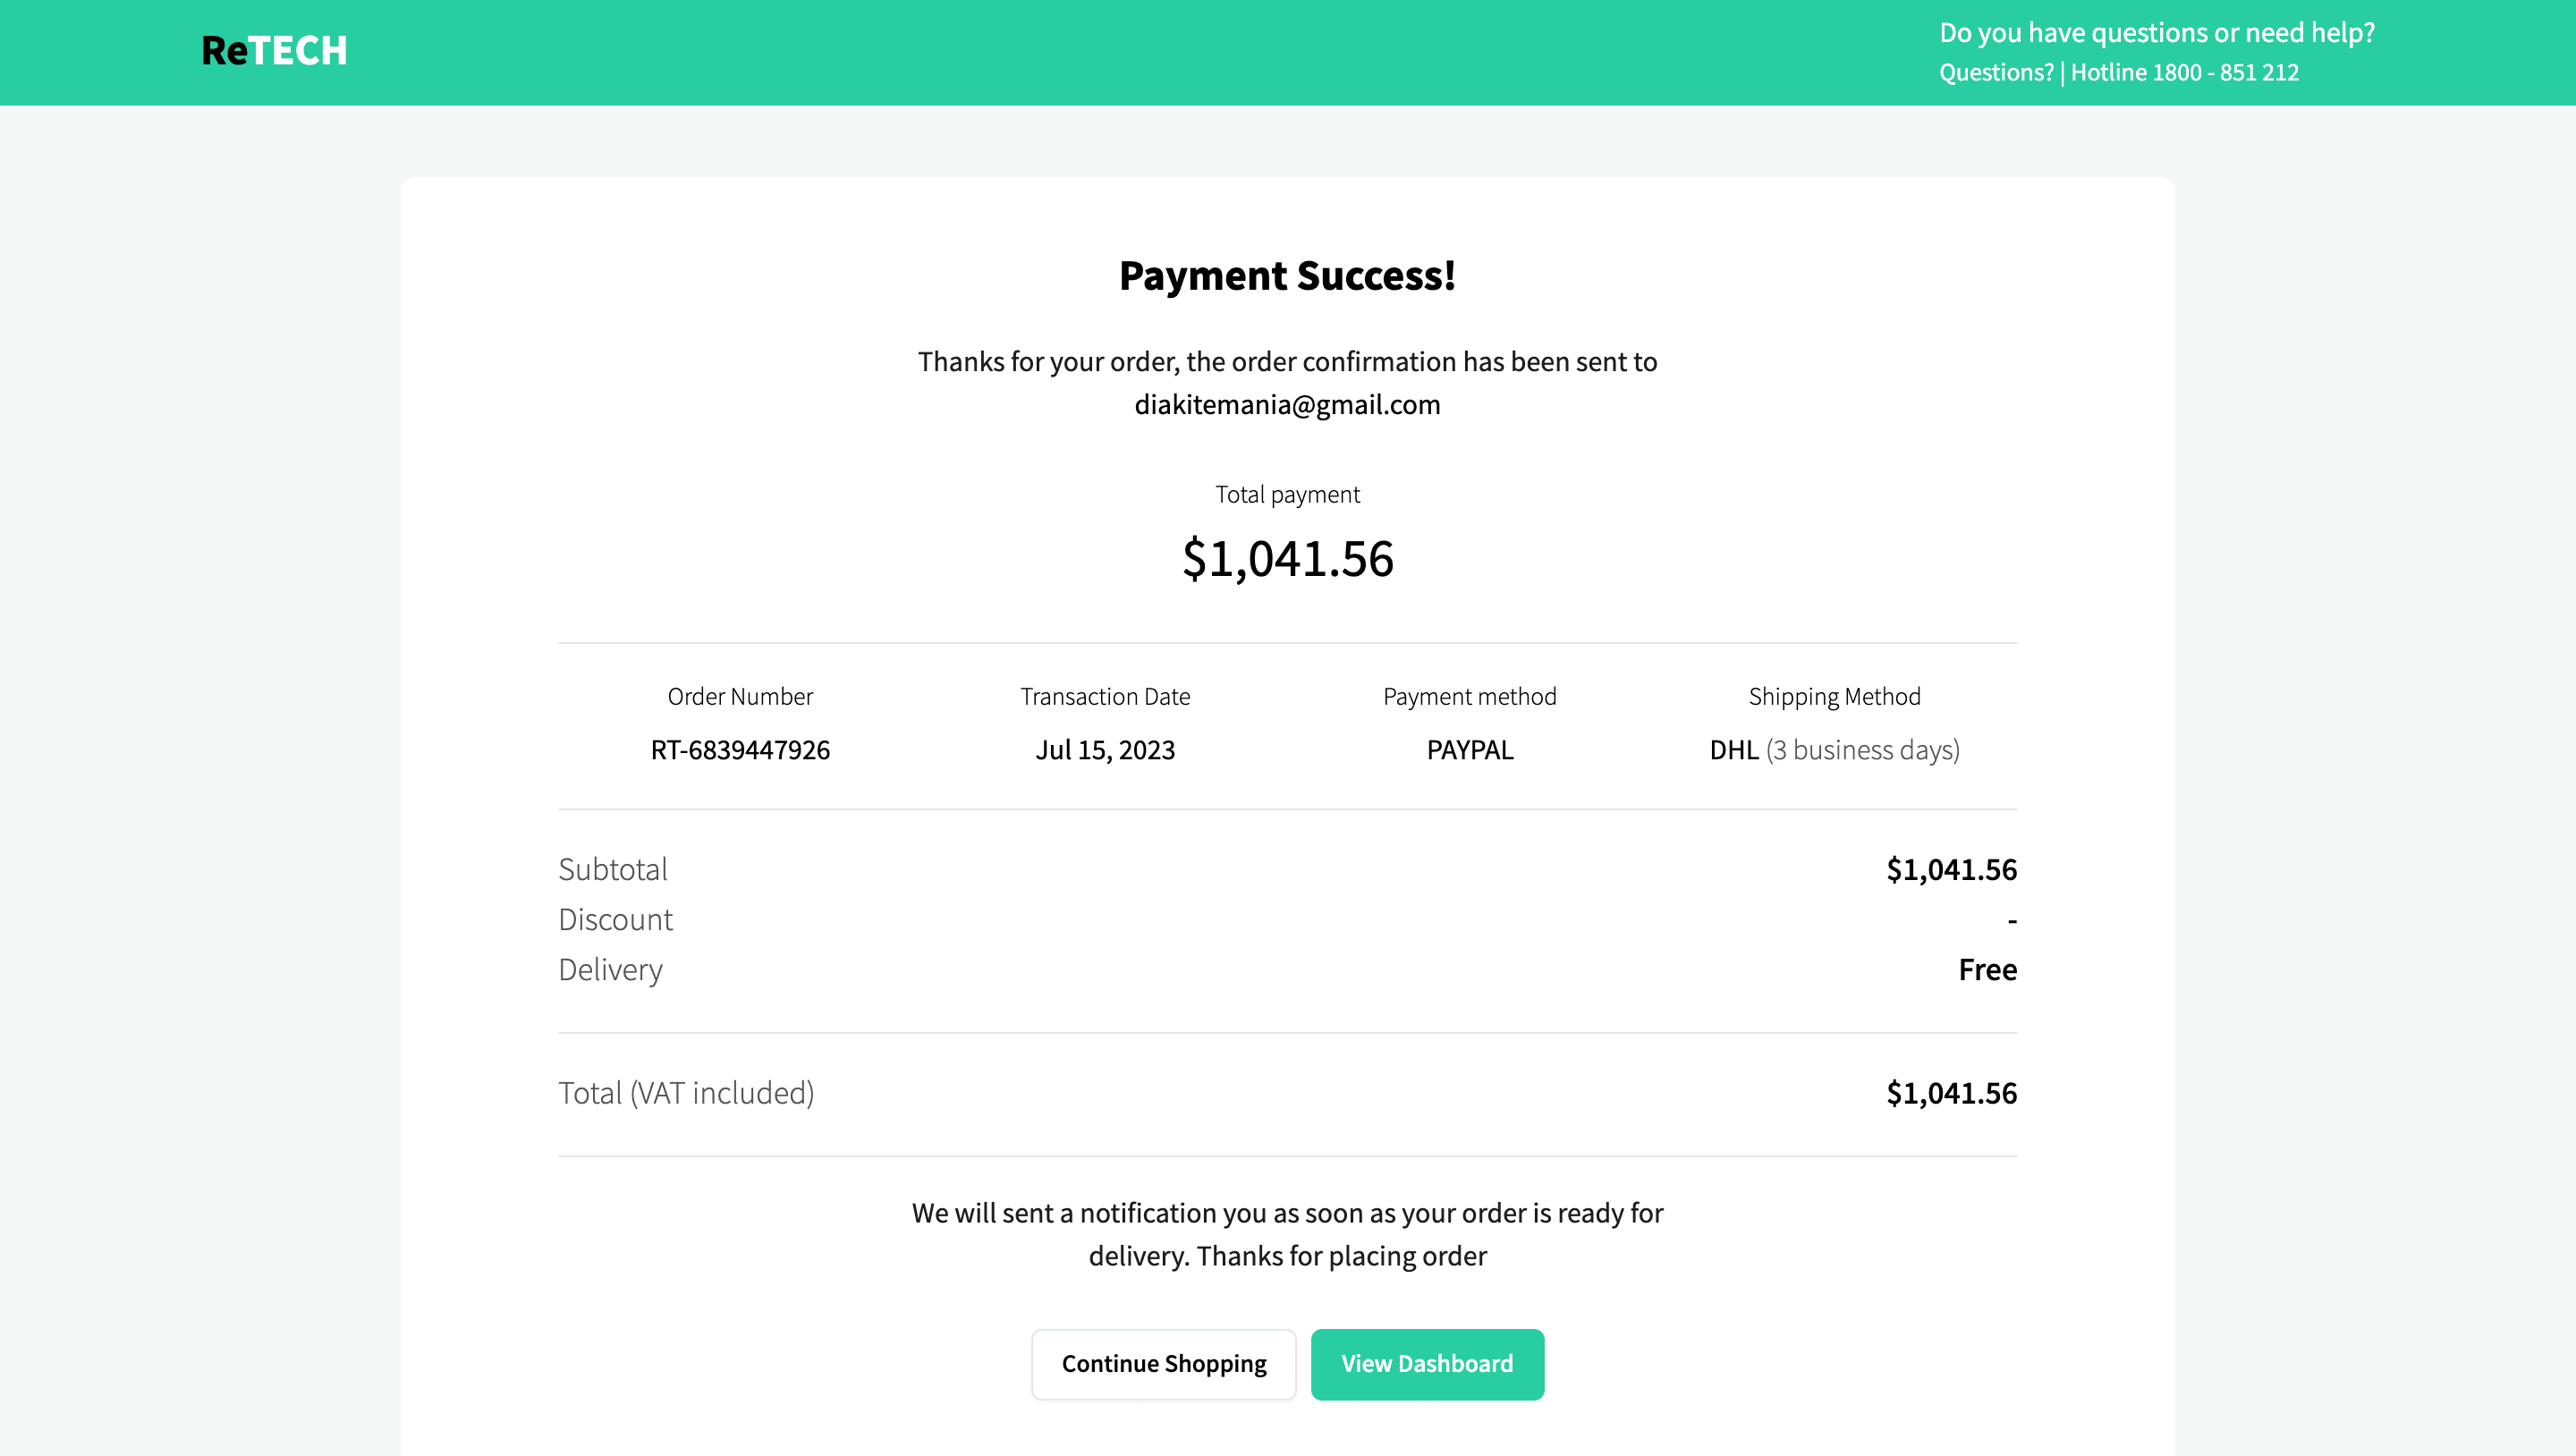 Payment success